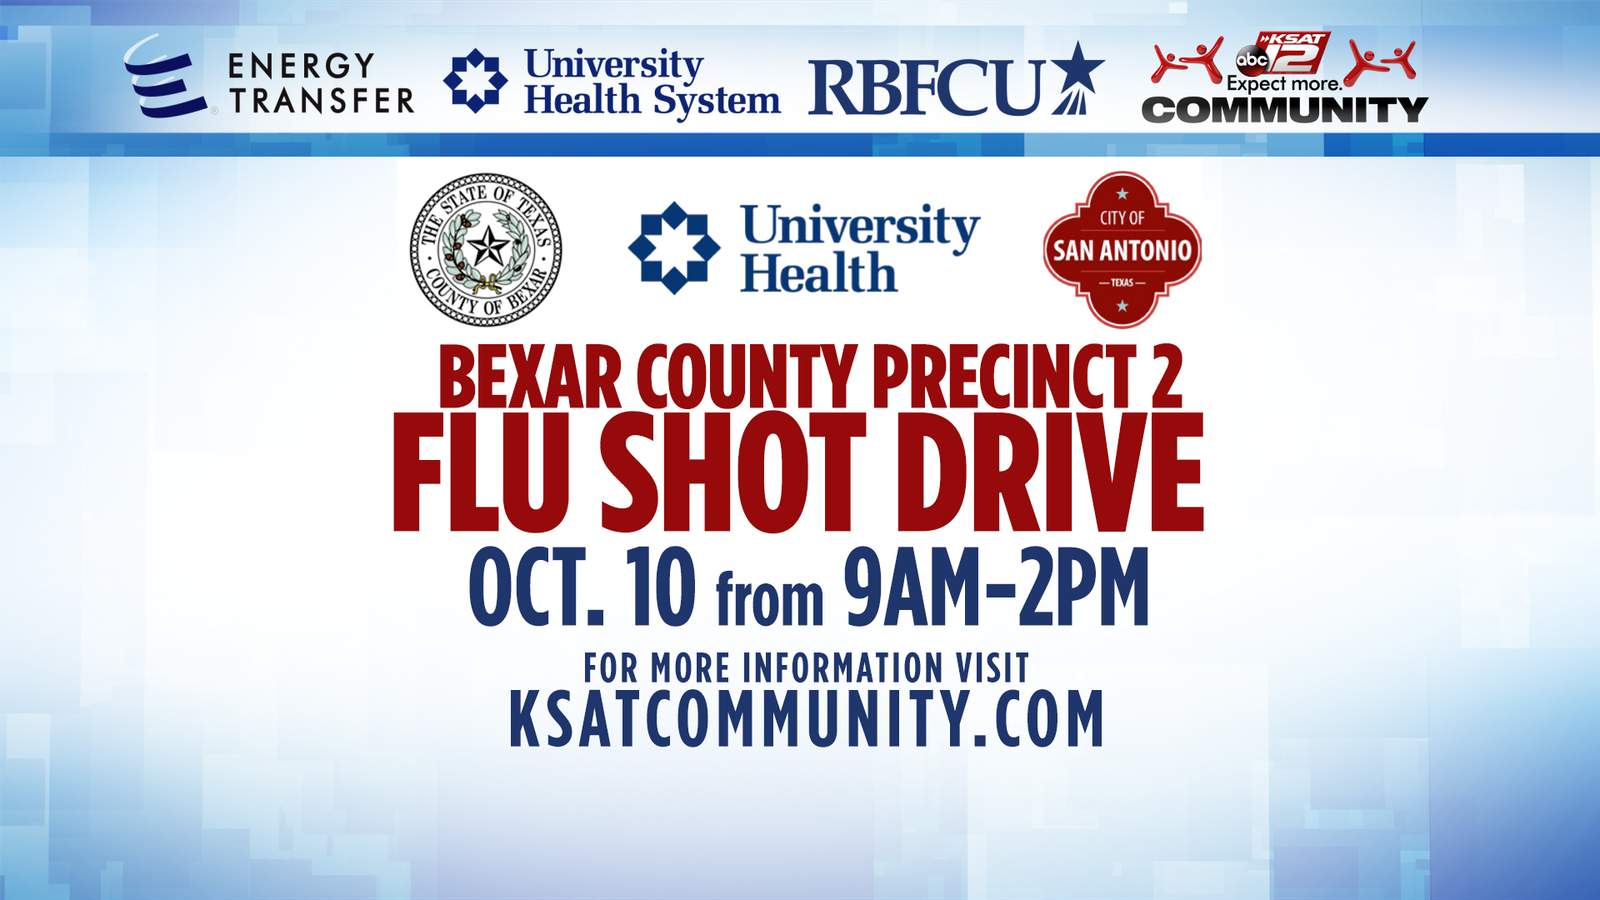 KSAT Community update: University Health System partners with Bexar County Precinct 2 Commissioner Justin Rodriguez for a drive-thru flu shot drive